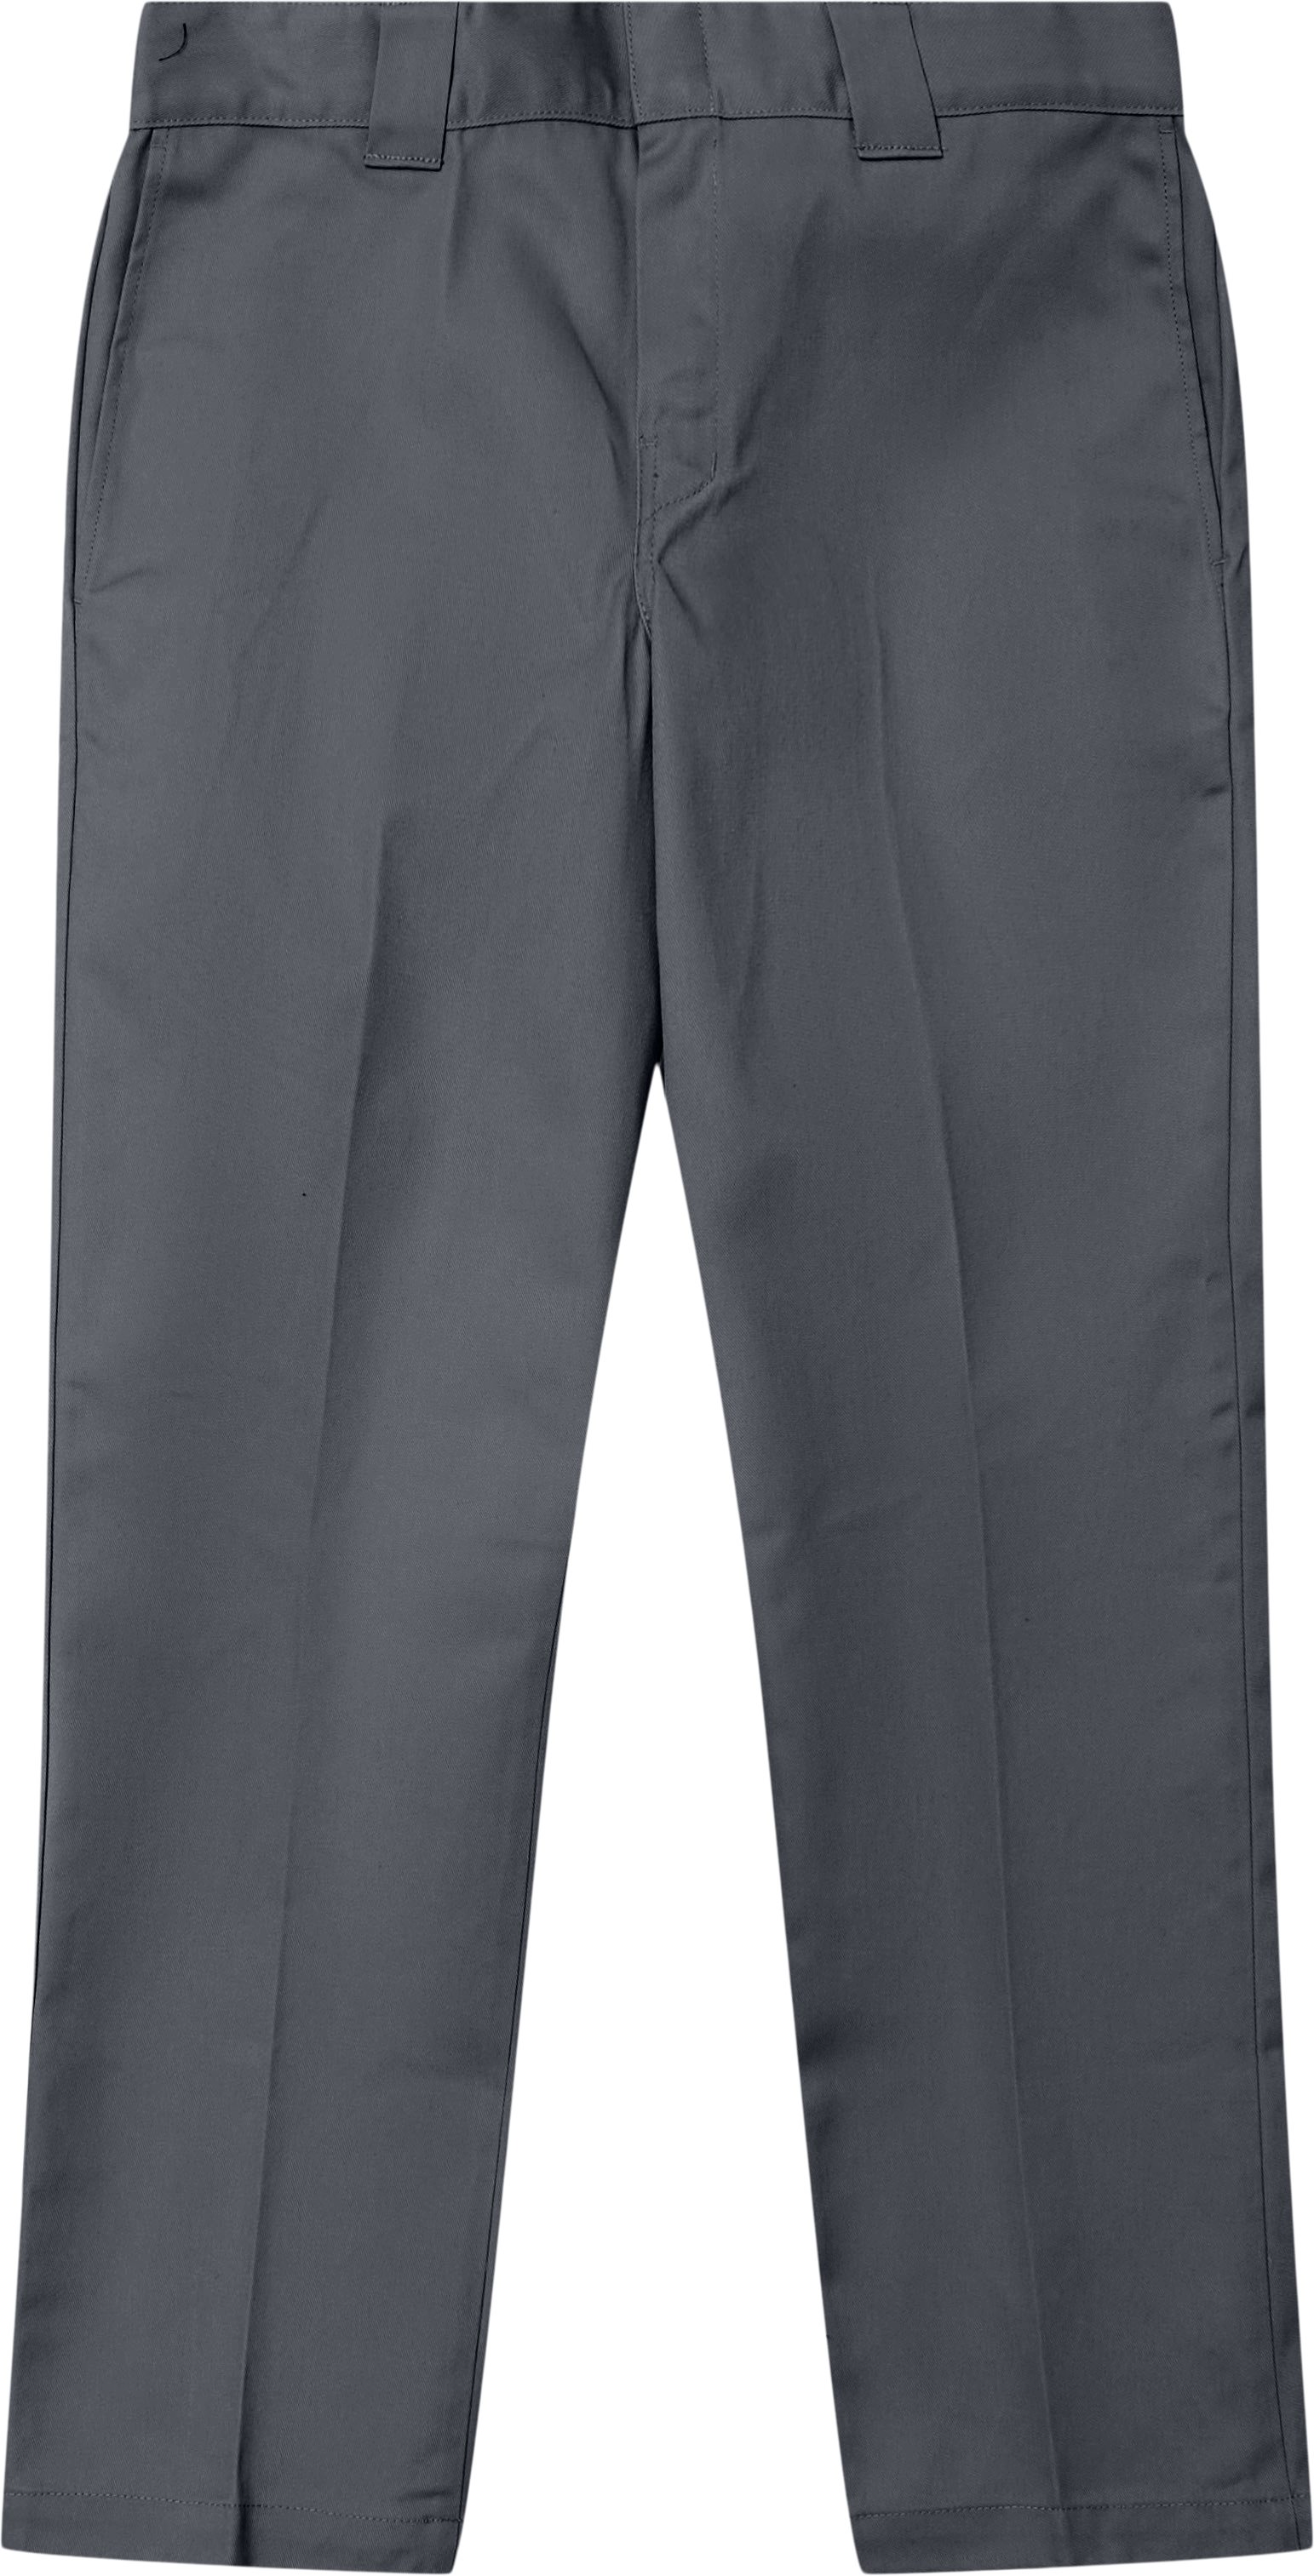 873 Work Pant - Trousers - Slim fit - Grey